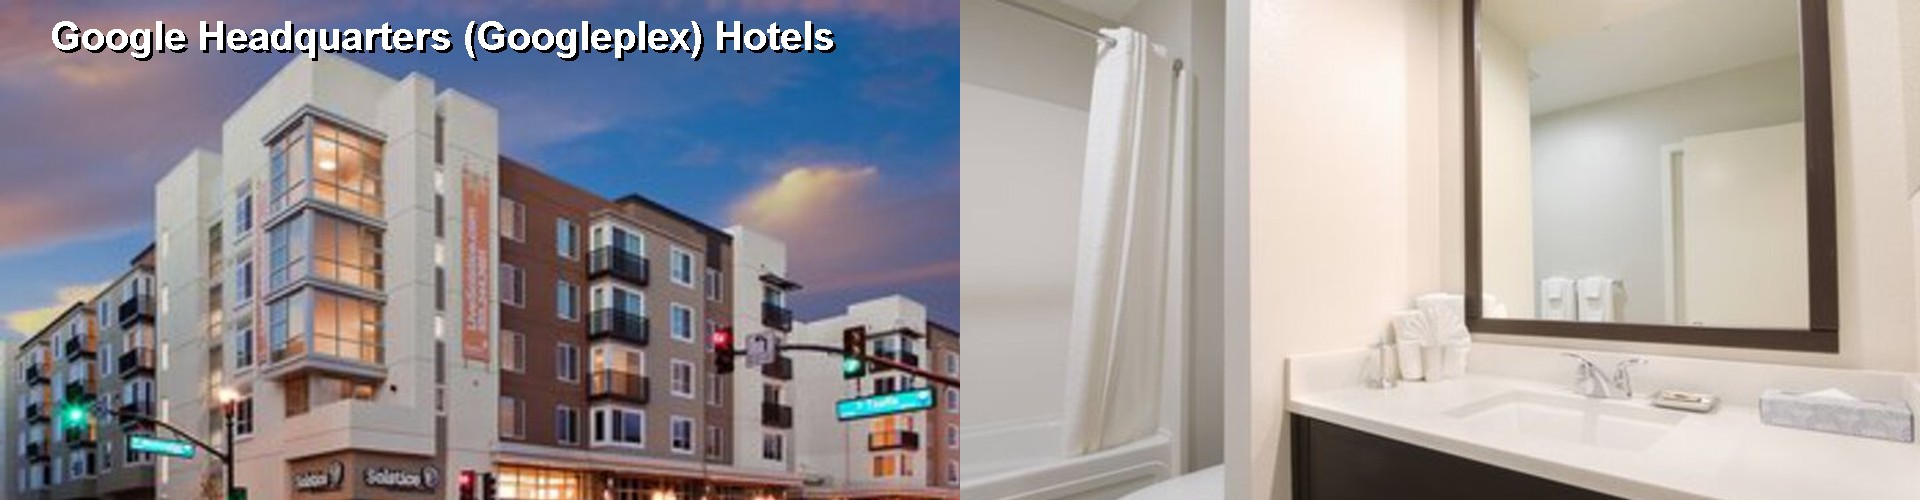 4 Best Hotels near Google Headquarters (Googleplex)